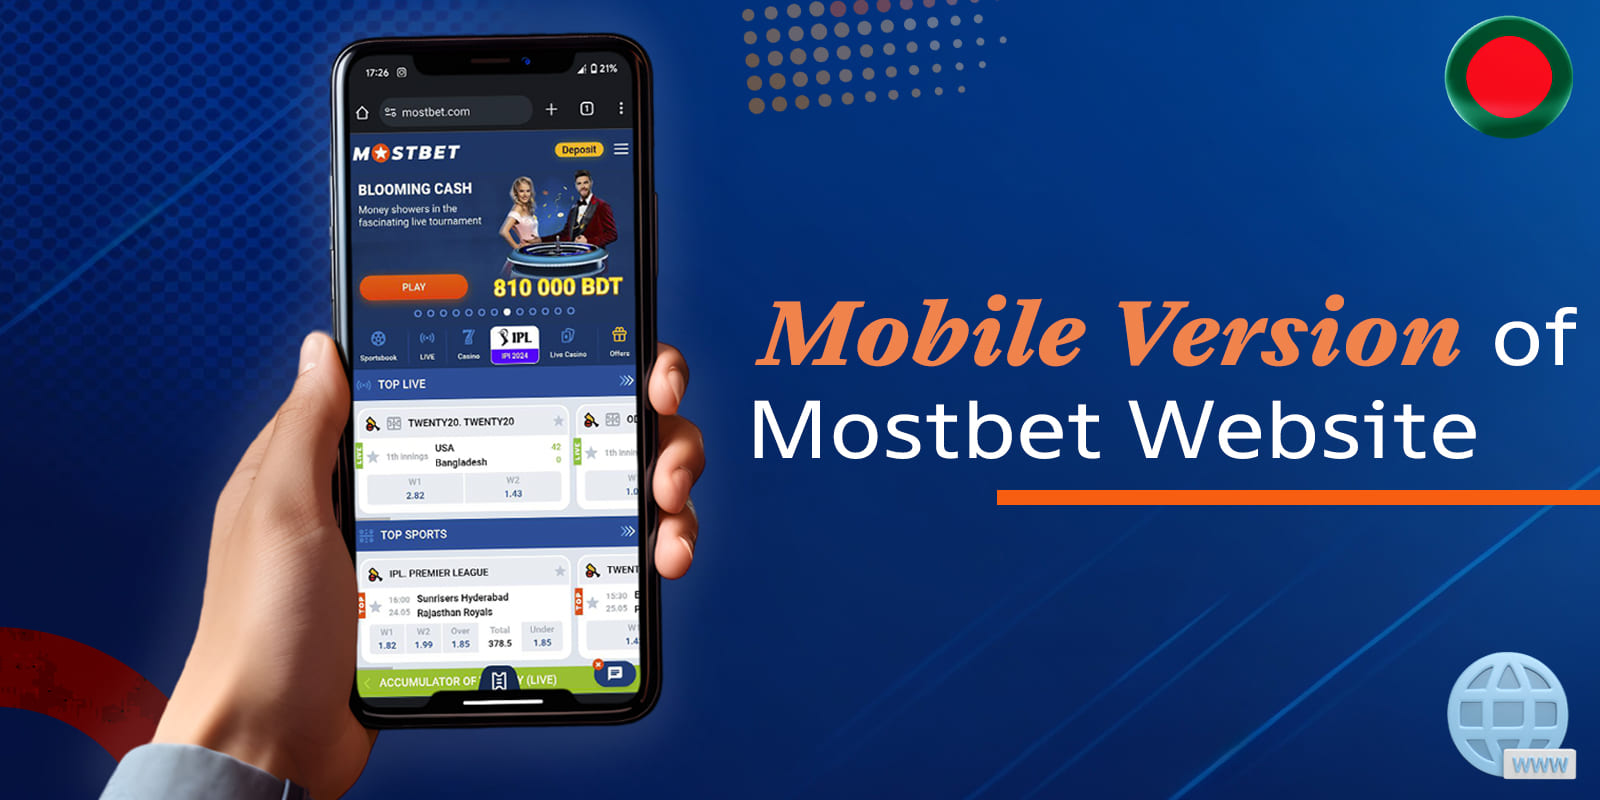 Mobile version of Mostbet website